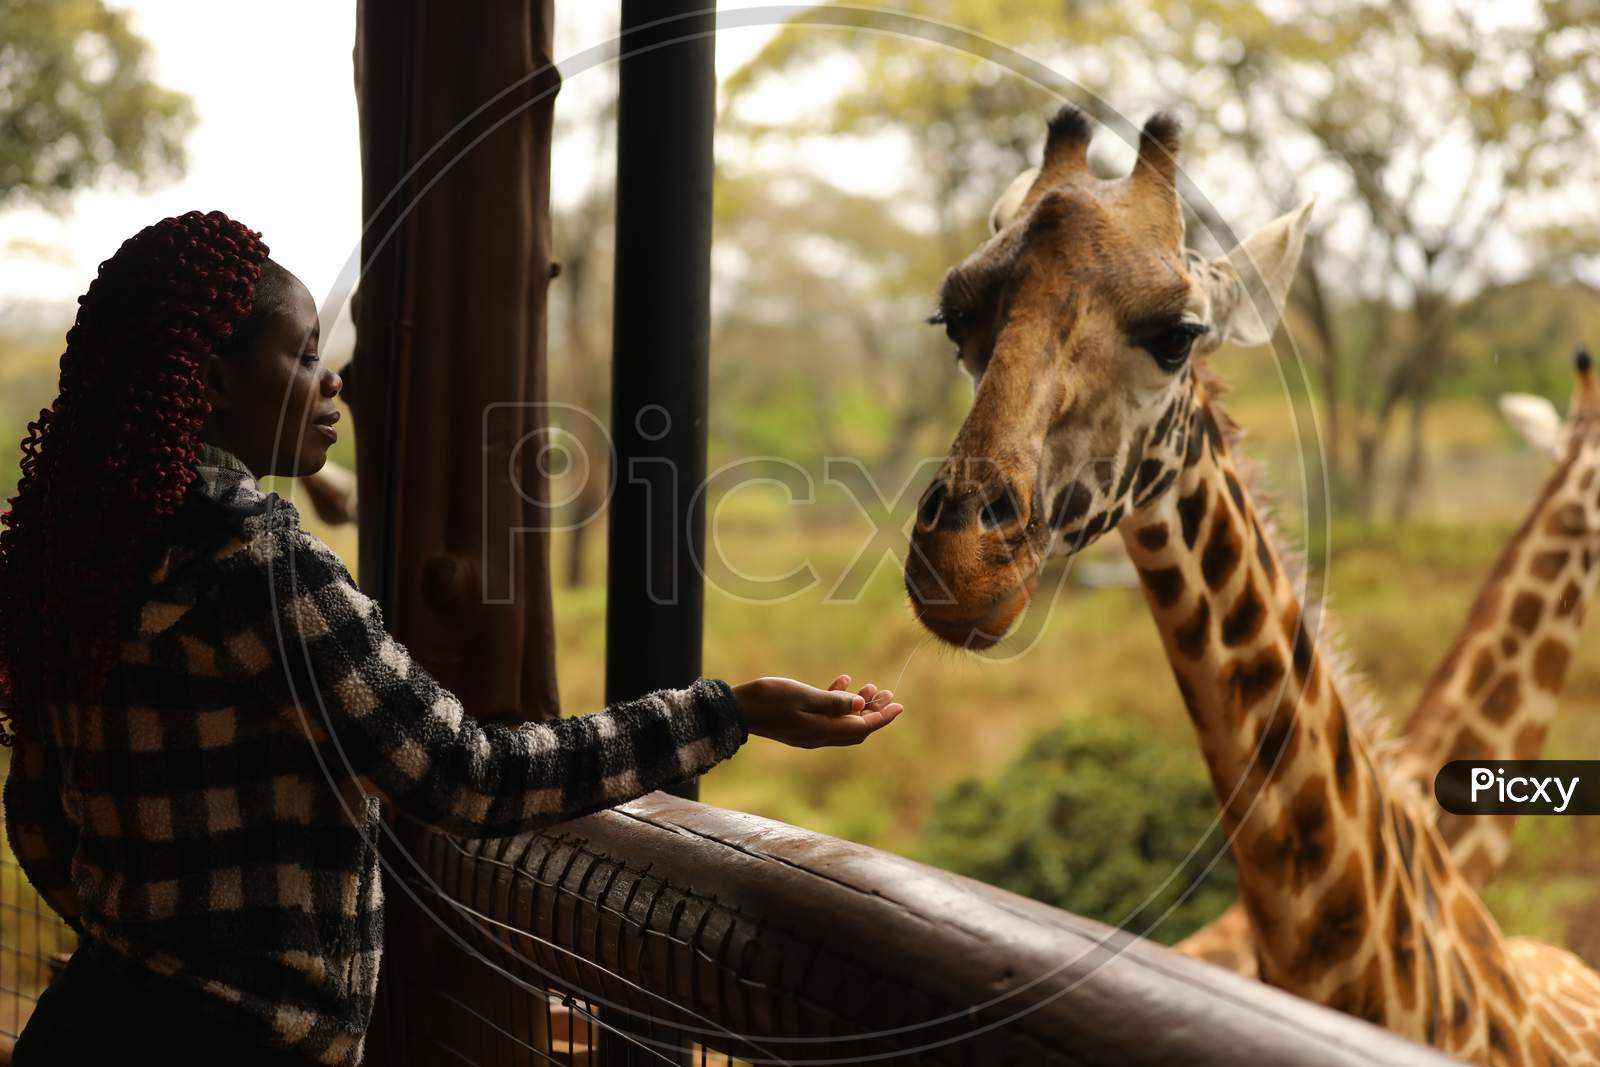 A Woman feeding  Giraffe in kenya